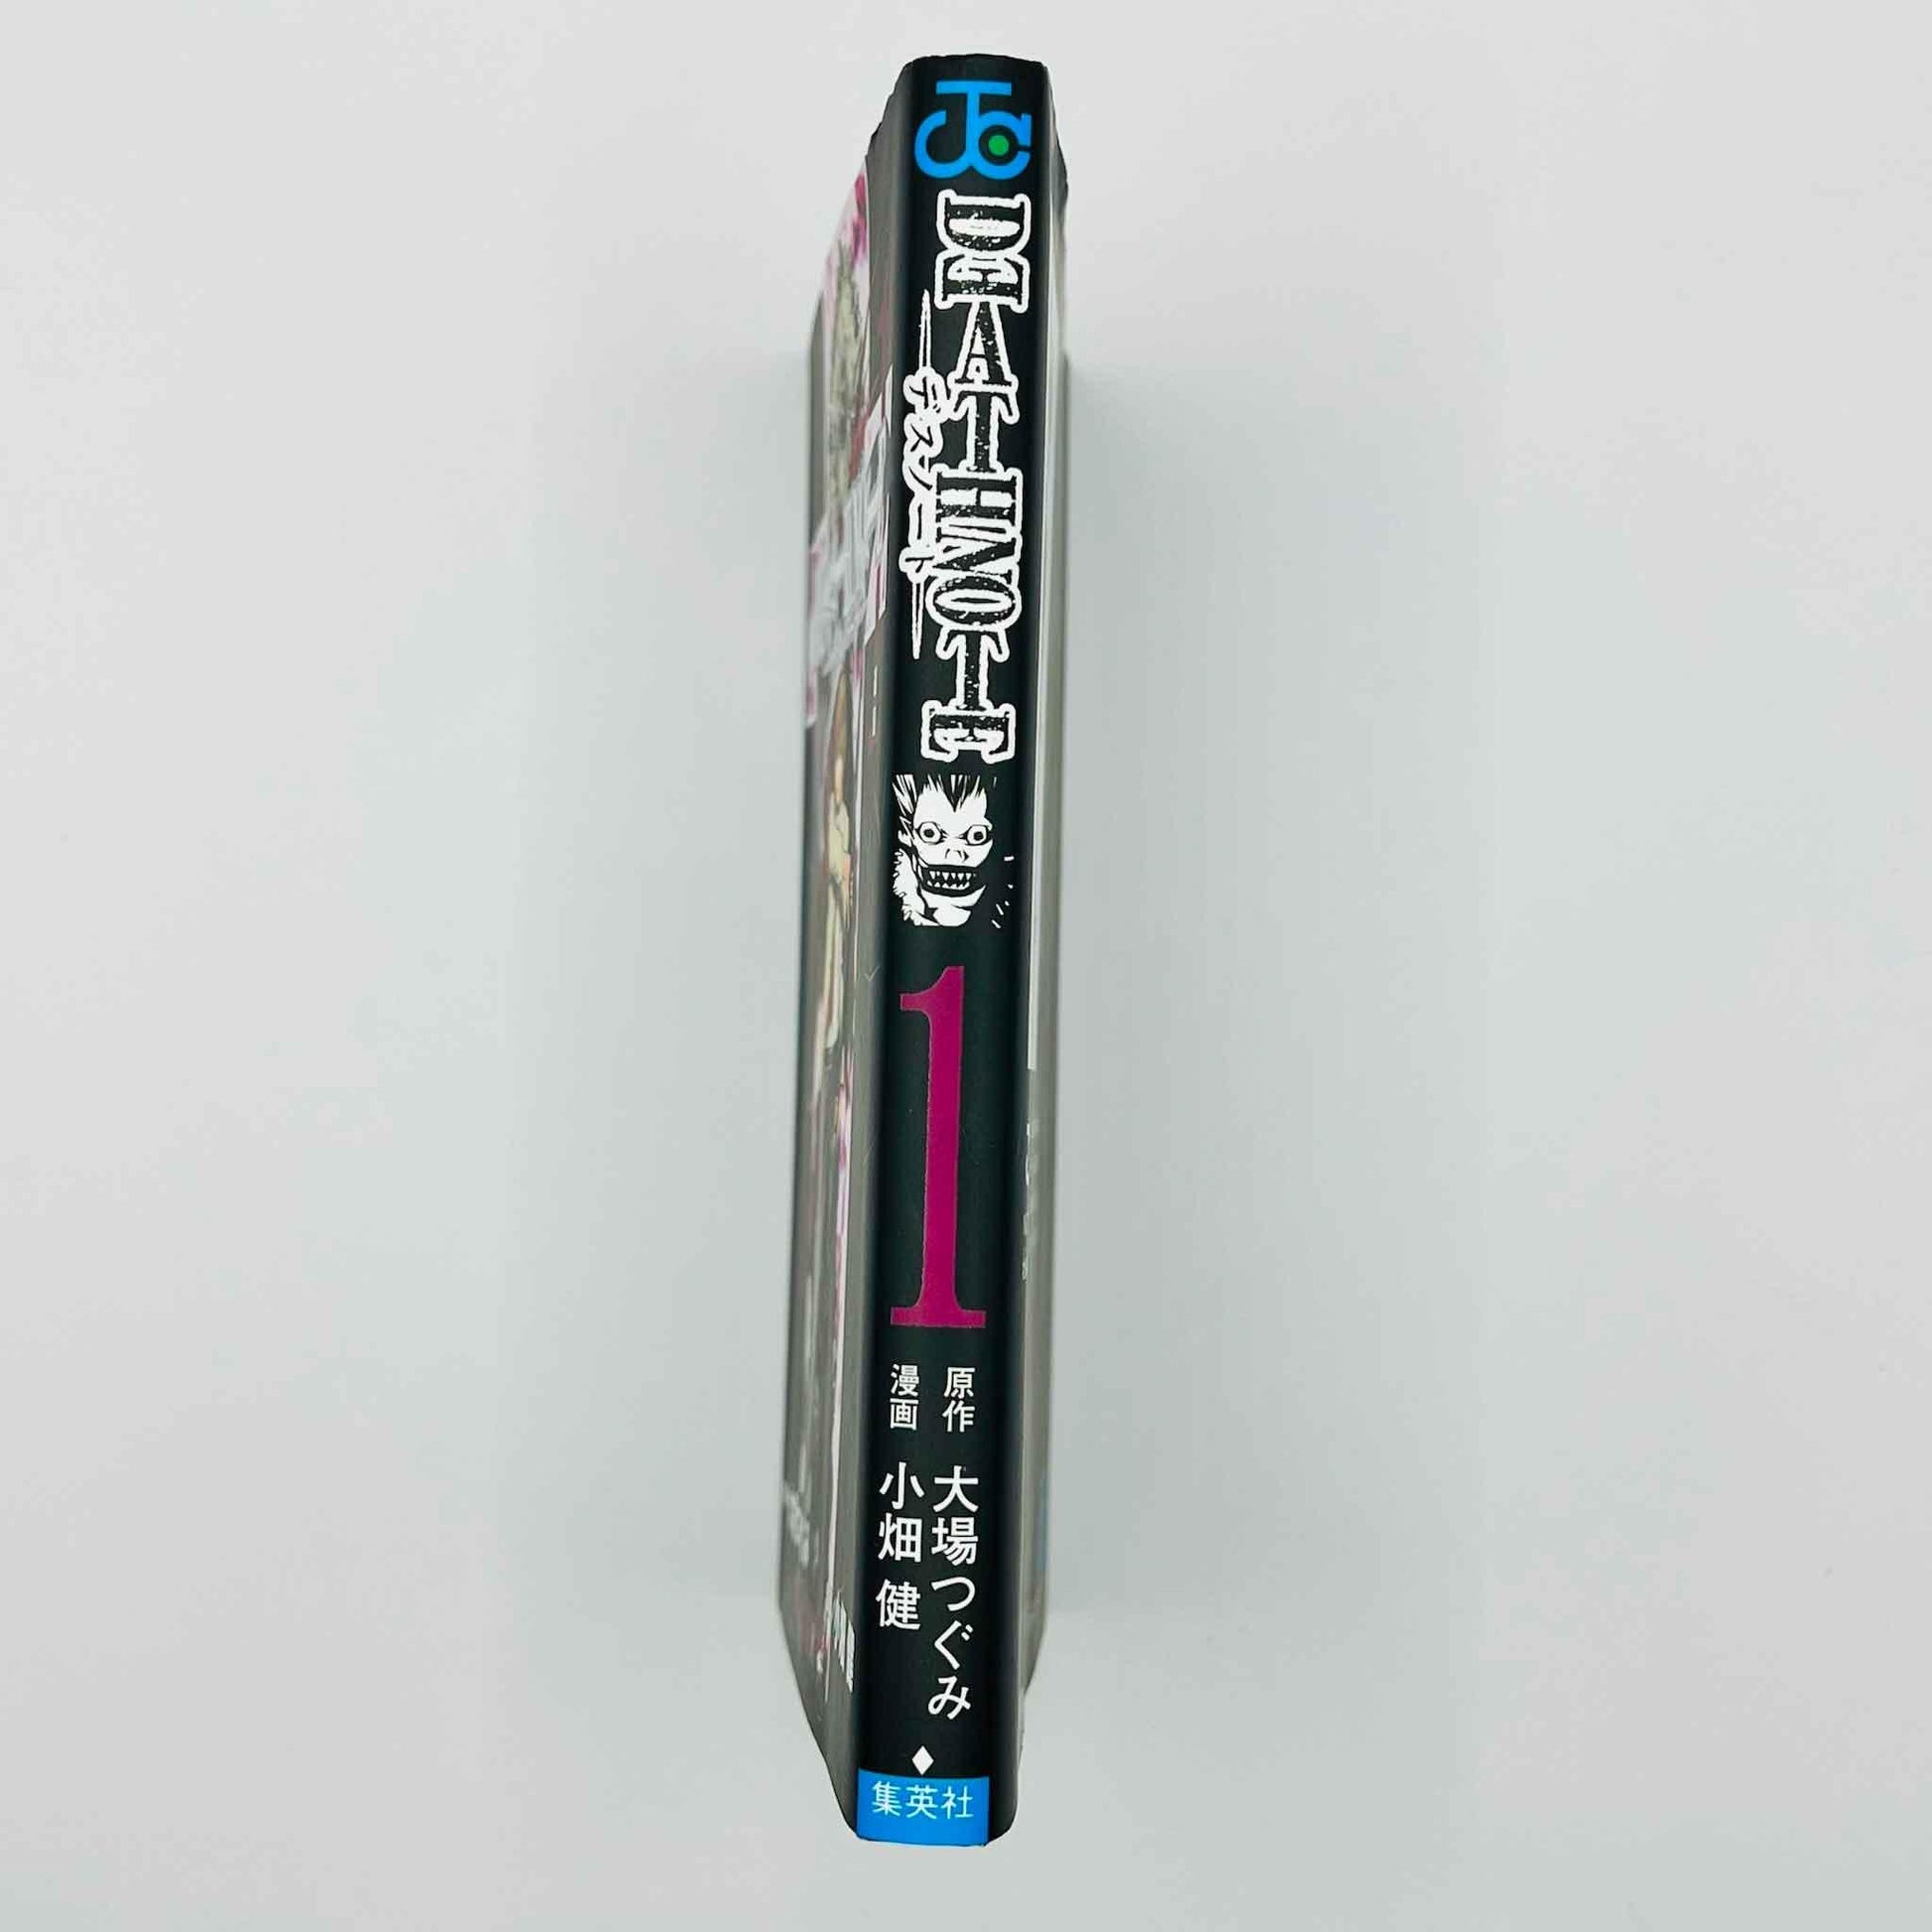 Death Note - Volume 01 - 1stPrint.net - 1st First Print Edition Manga Store - M-DN-01-002